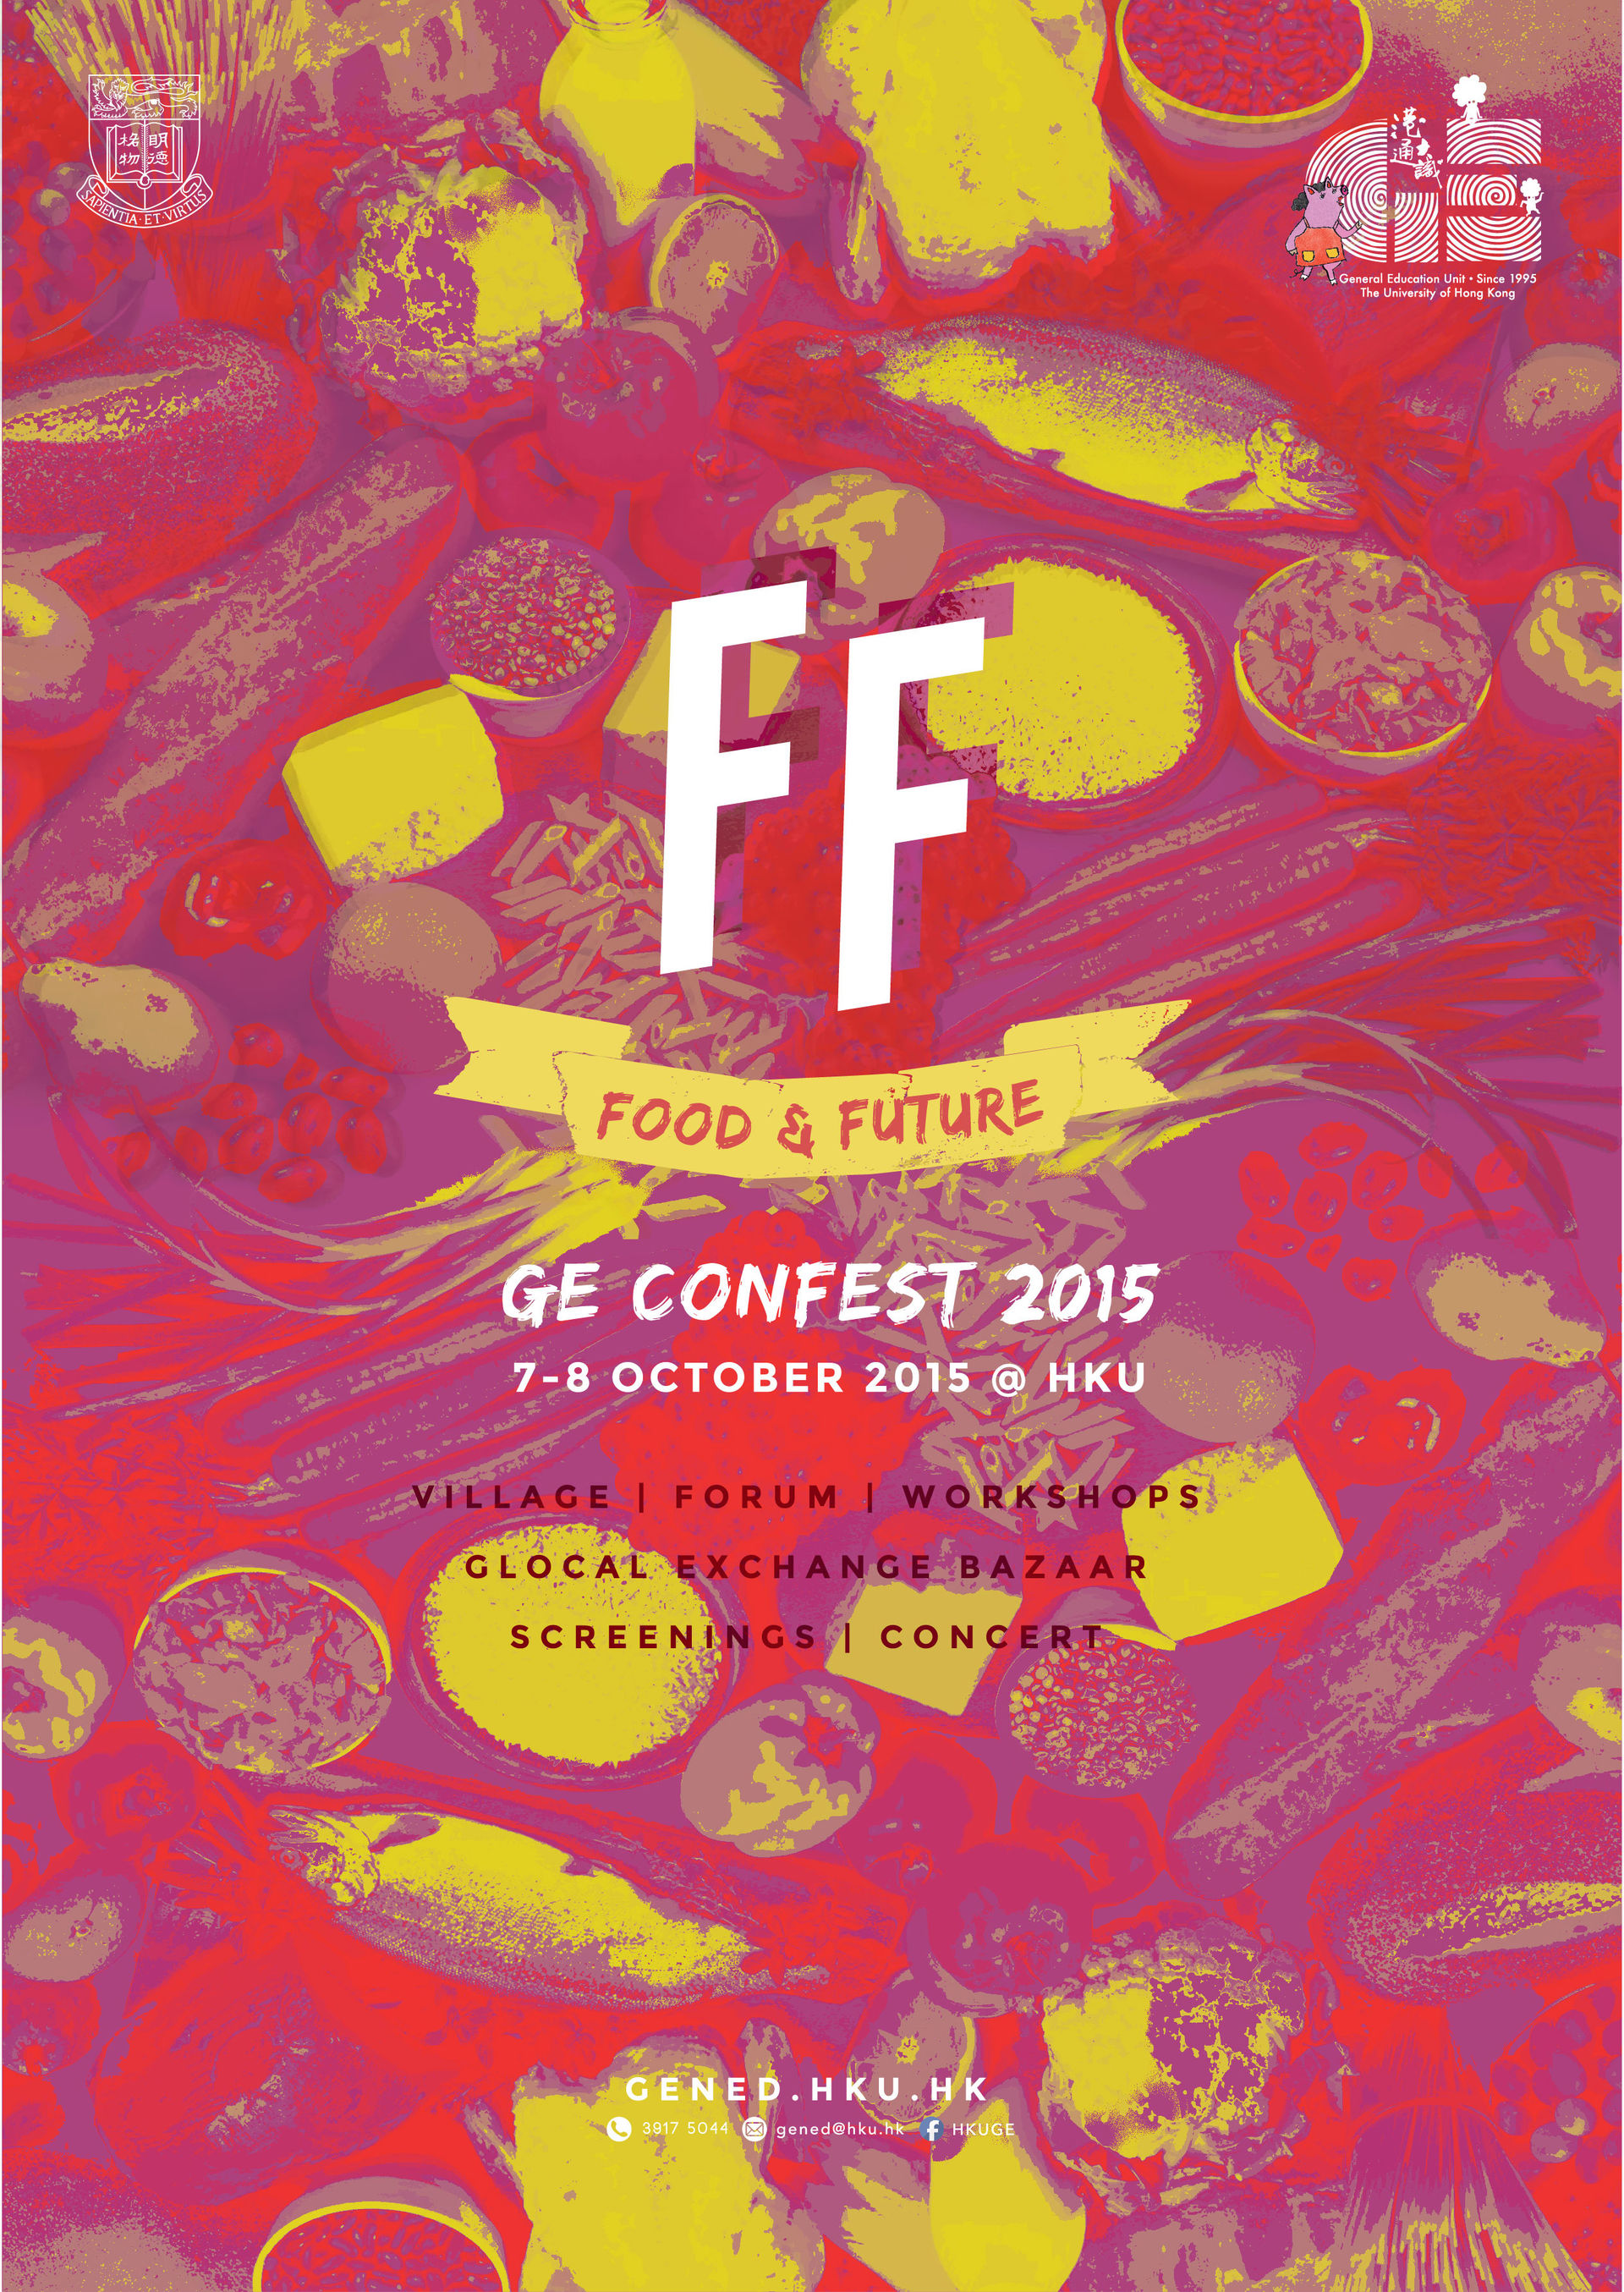 GE ConFest 2015 FF: Food & Future